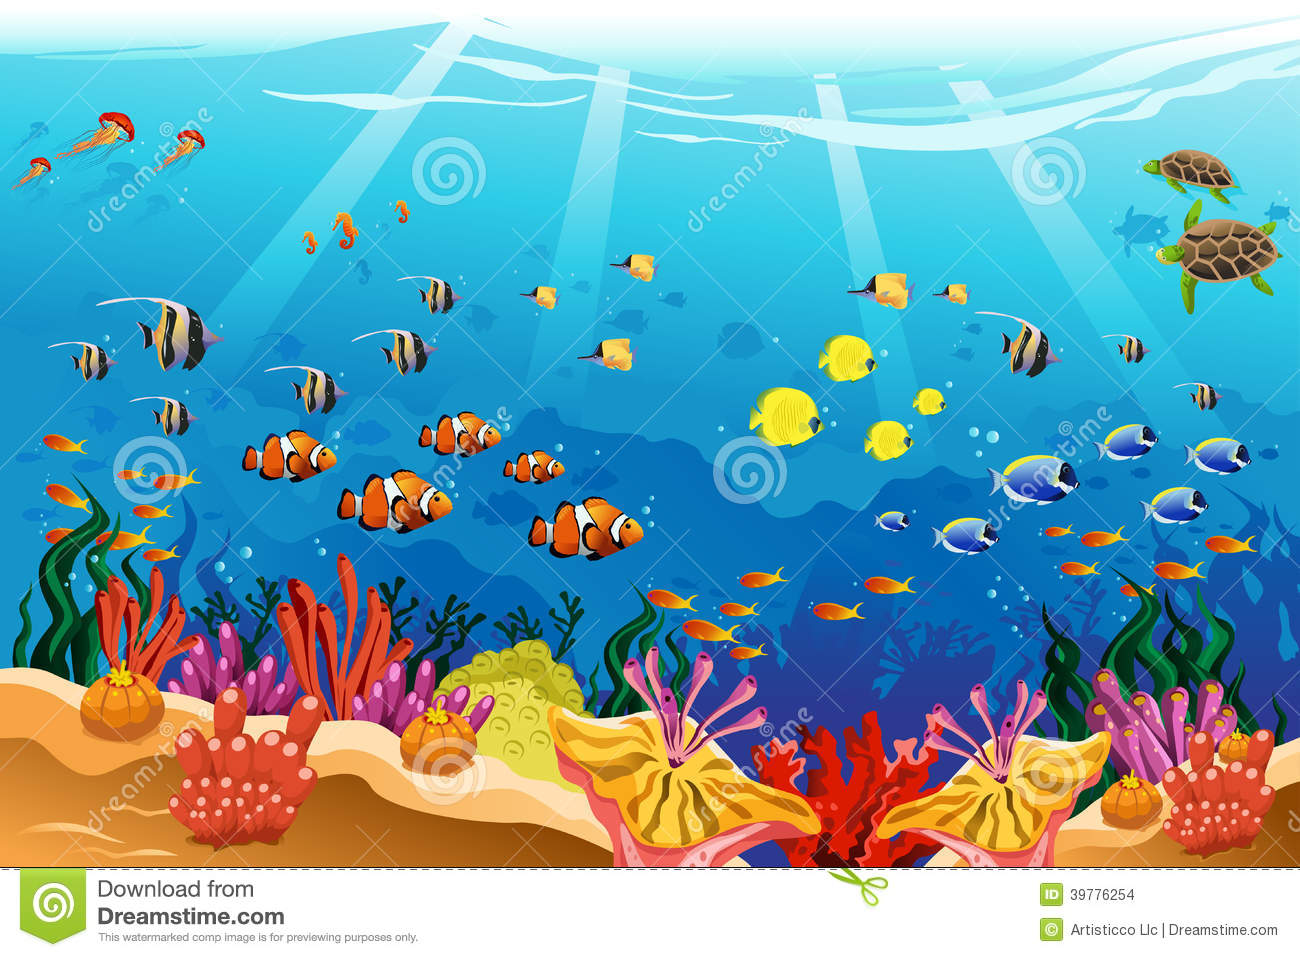 ocean depth: Image with .